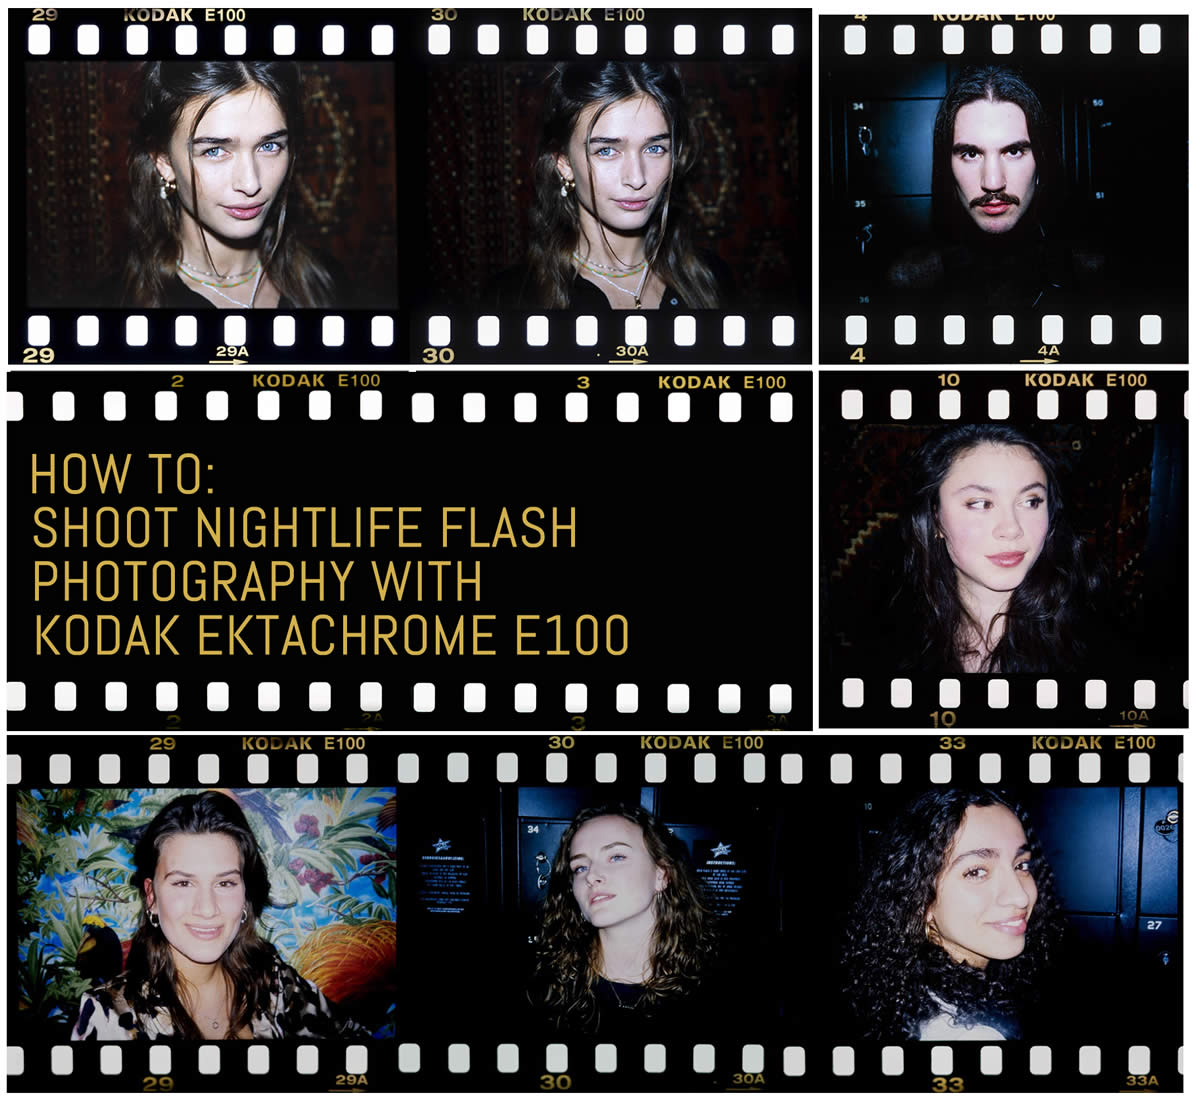 How to: Shoot nightlife flash photography with Kodak Ektachrome E100